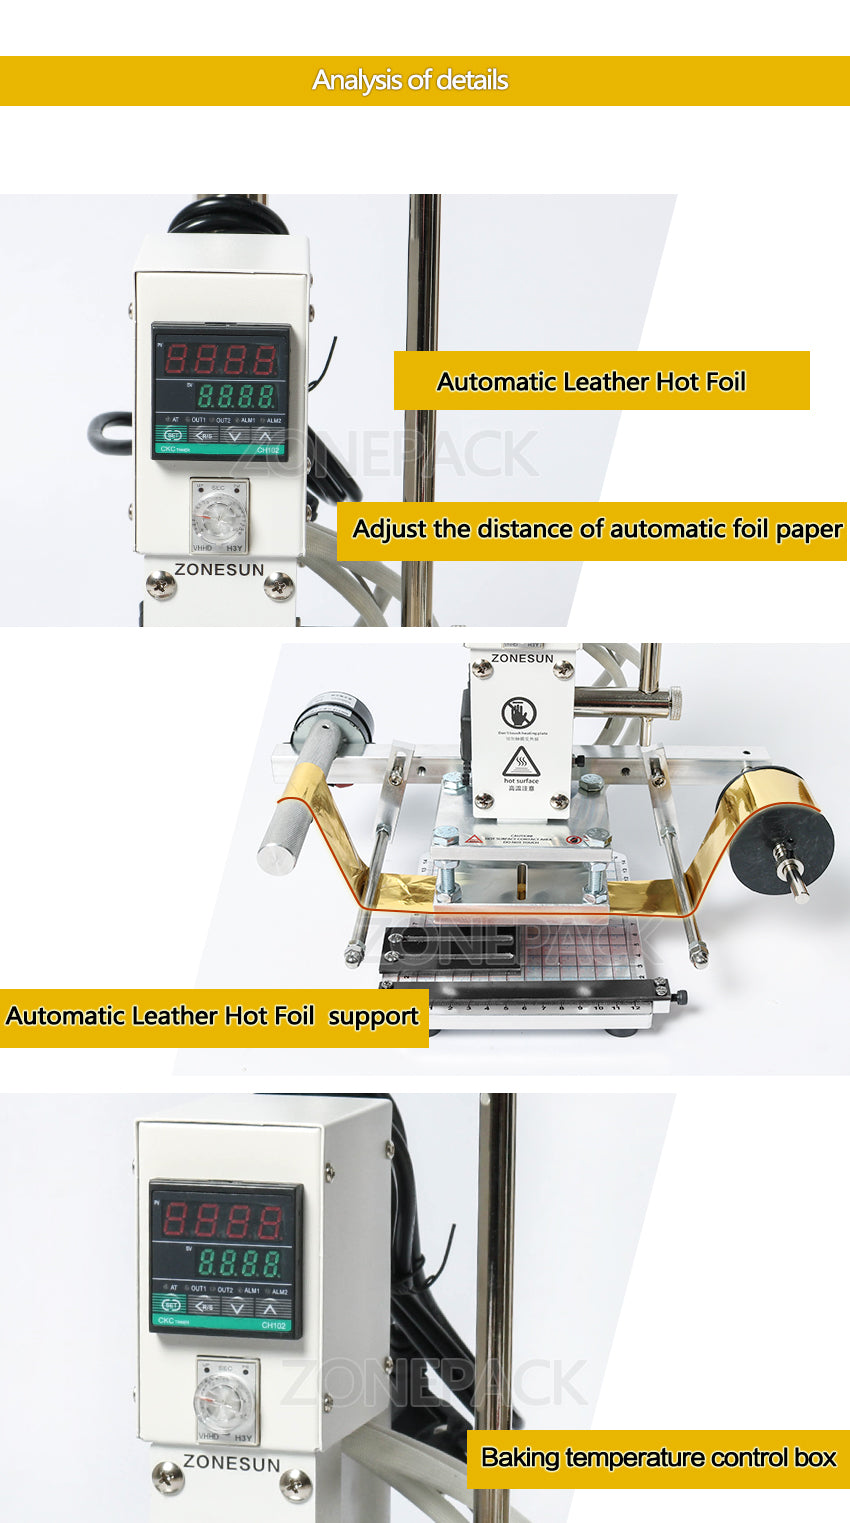 ZONEPACK Digital Automatic Leather Hot Foil Stamping Machine Manual Embossing Tool 300W Creasing Wood Paper PVC Card Printer DIY